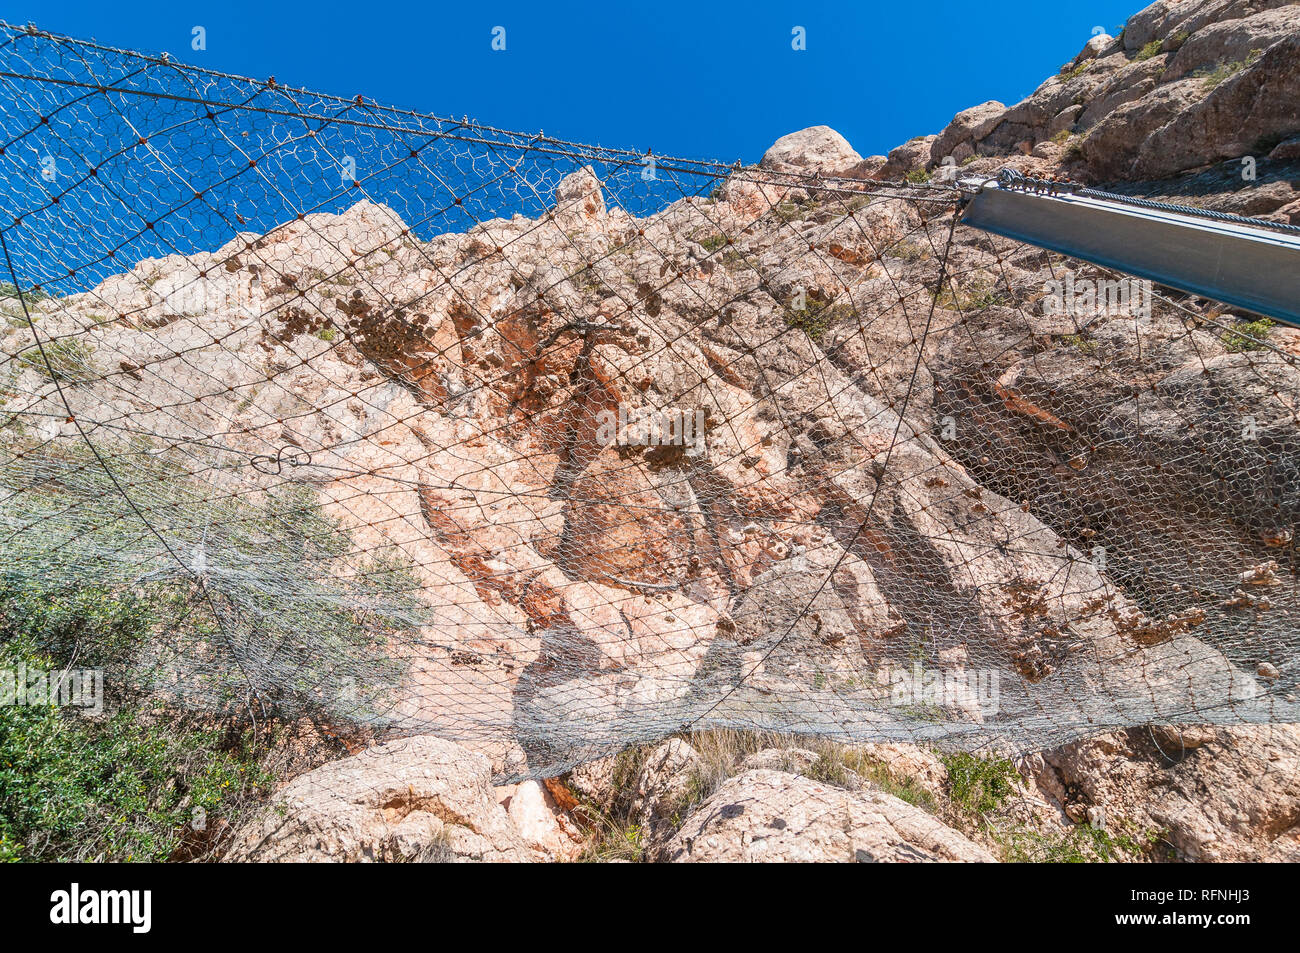 Netting barriera caduta massi in insenature di Montserrat ingresso, Collbató, Catalogna, Spagna Foto Stock